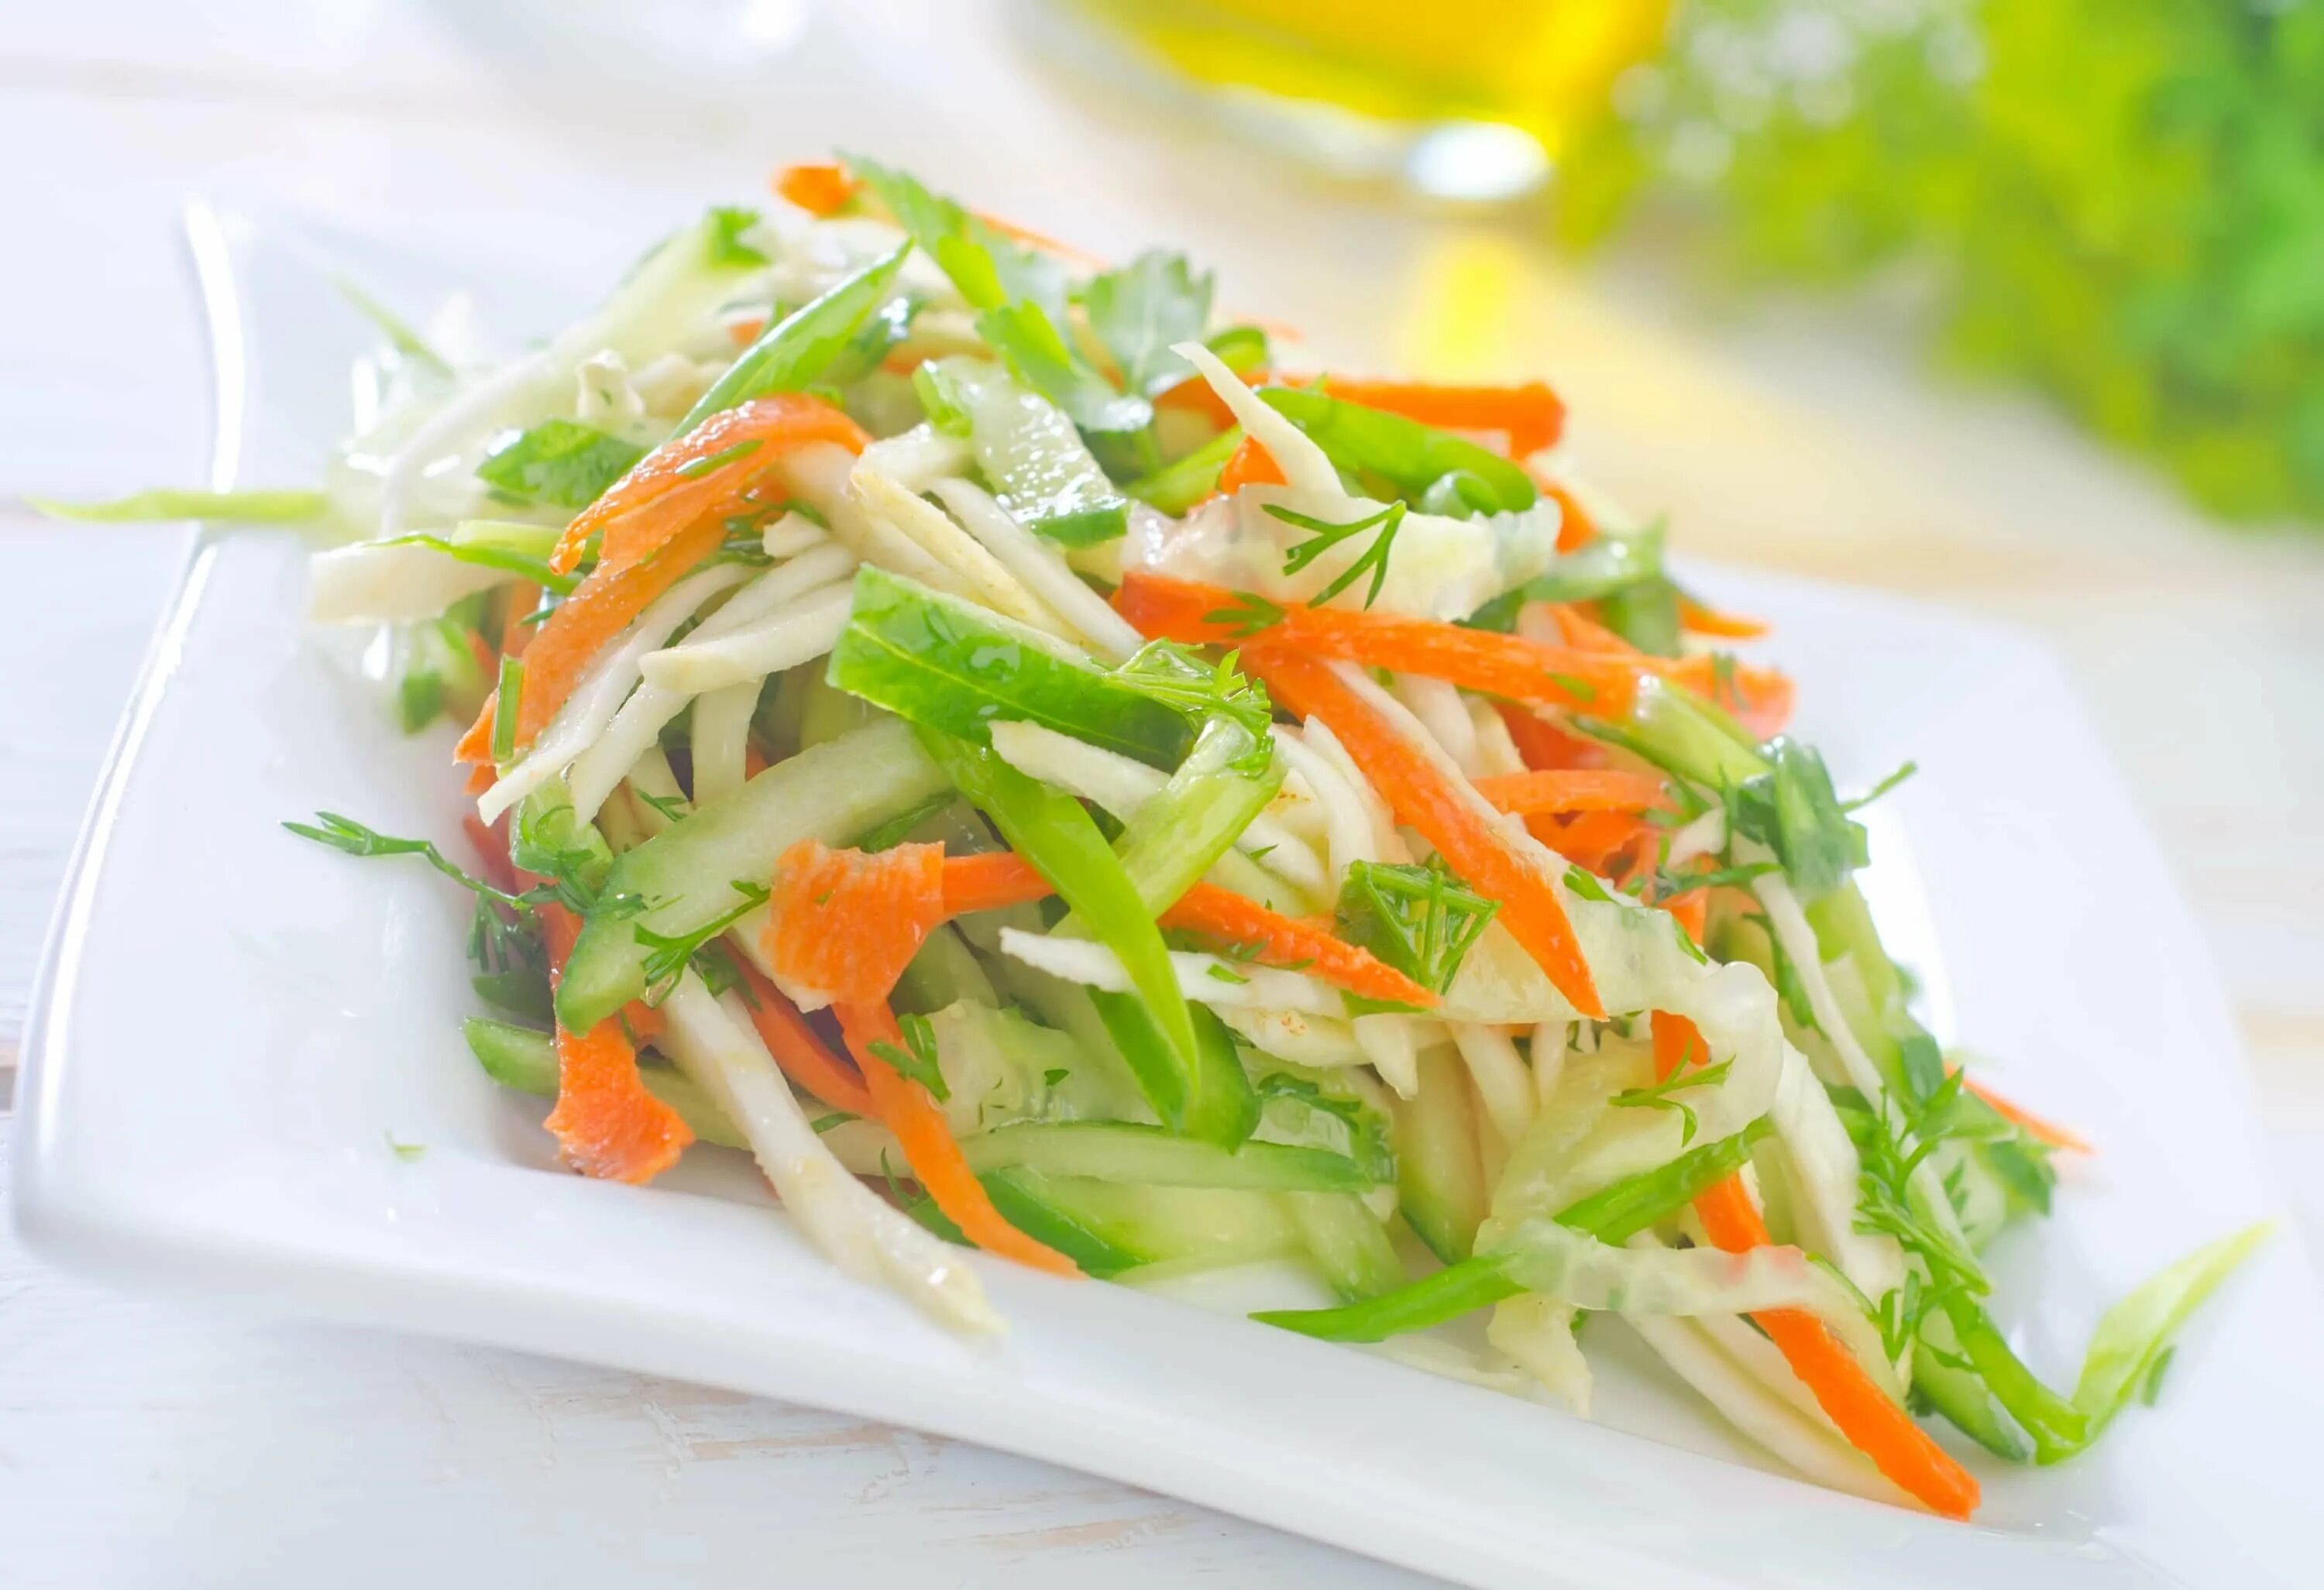 Витаминный (капуста, перец, огурец, морковь) 100г - 35р. Салат из капусты. Салат витаминный. Овощной витаминный салат.